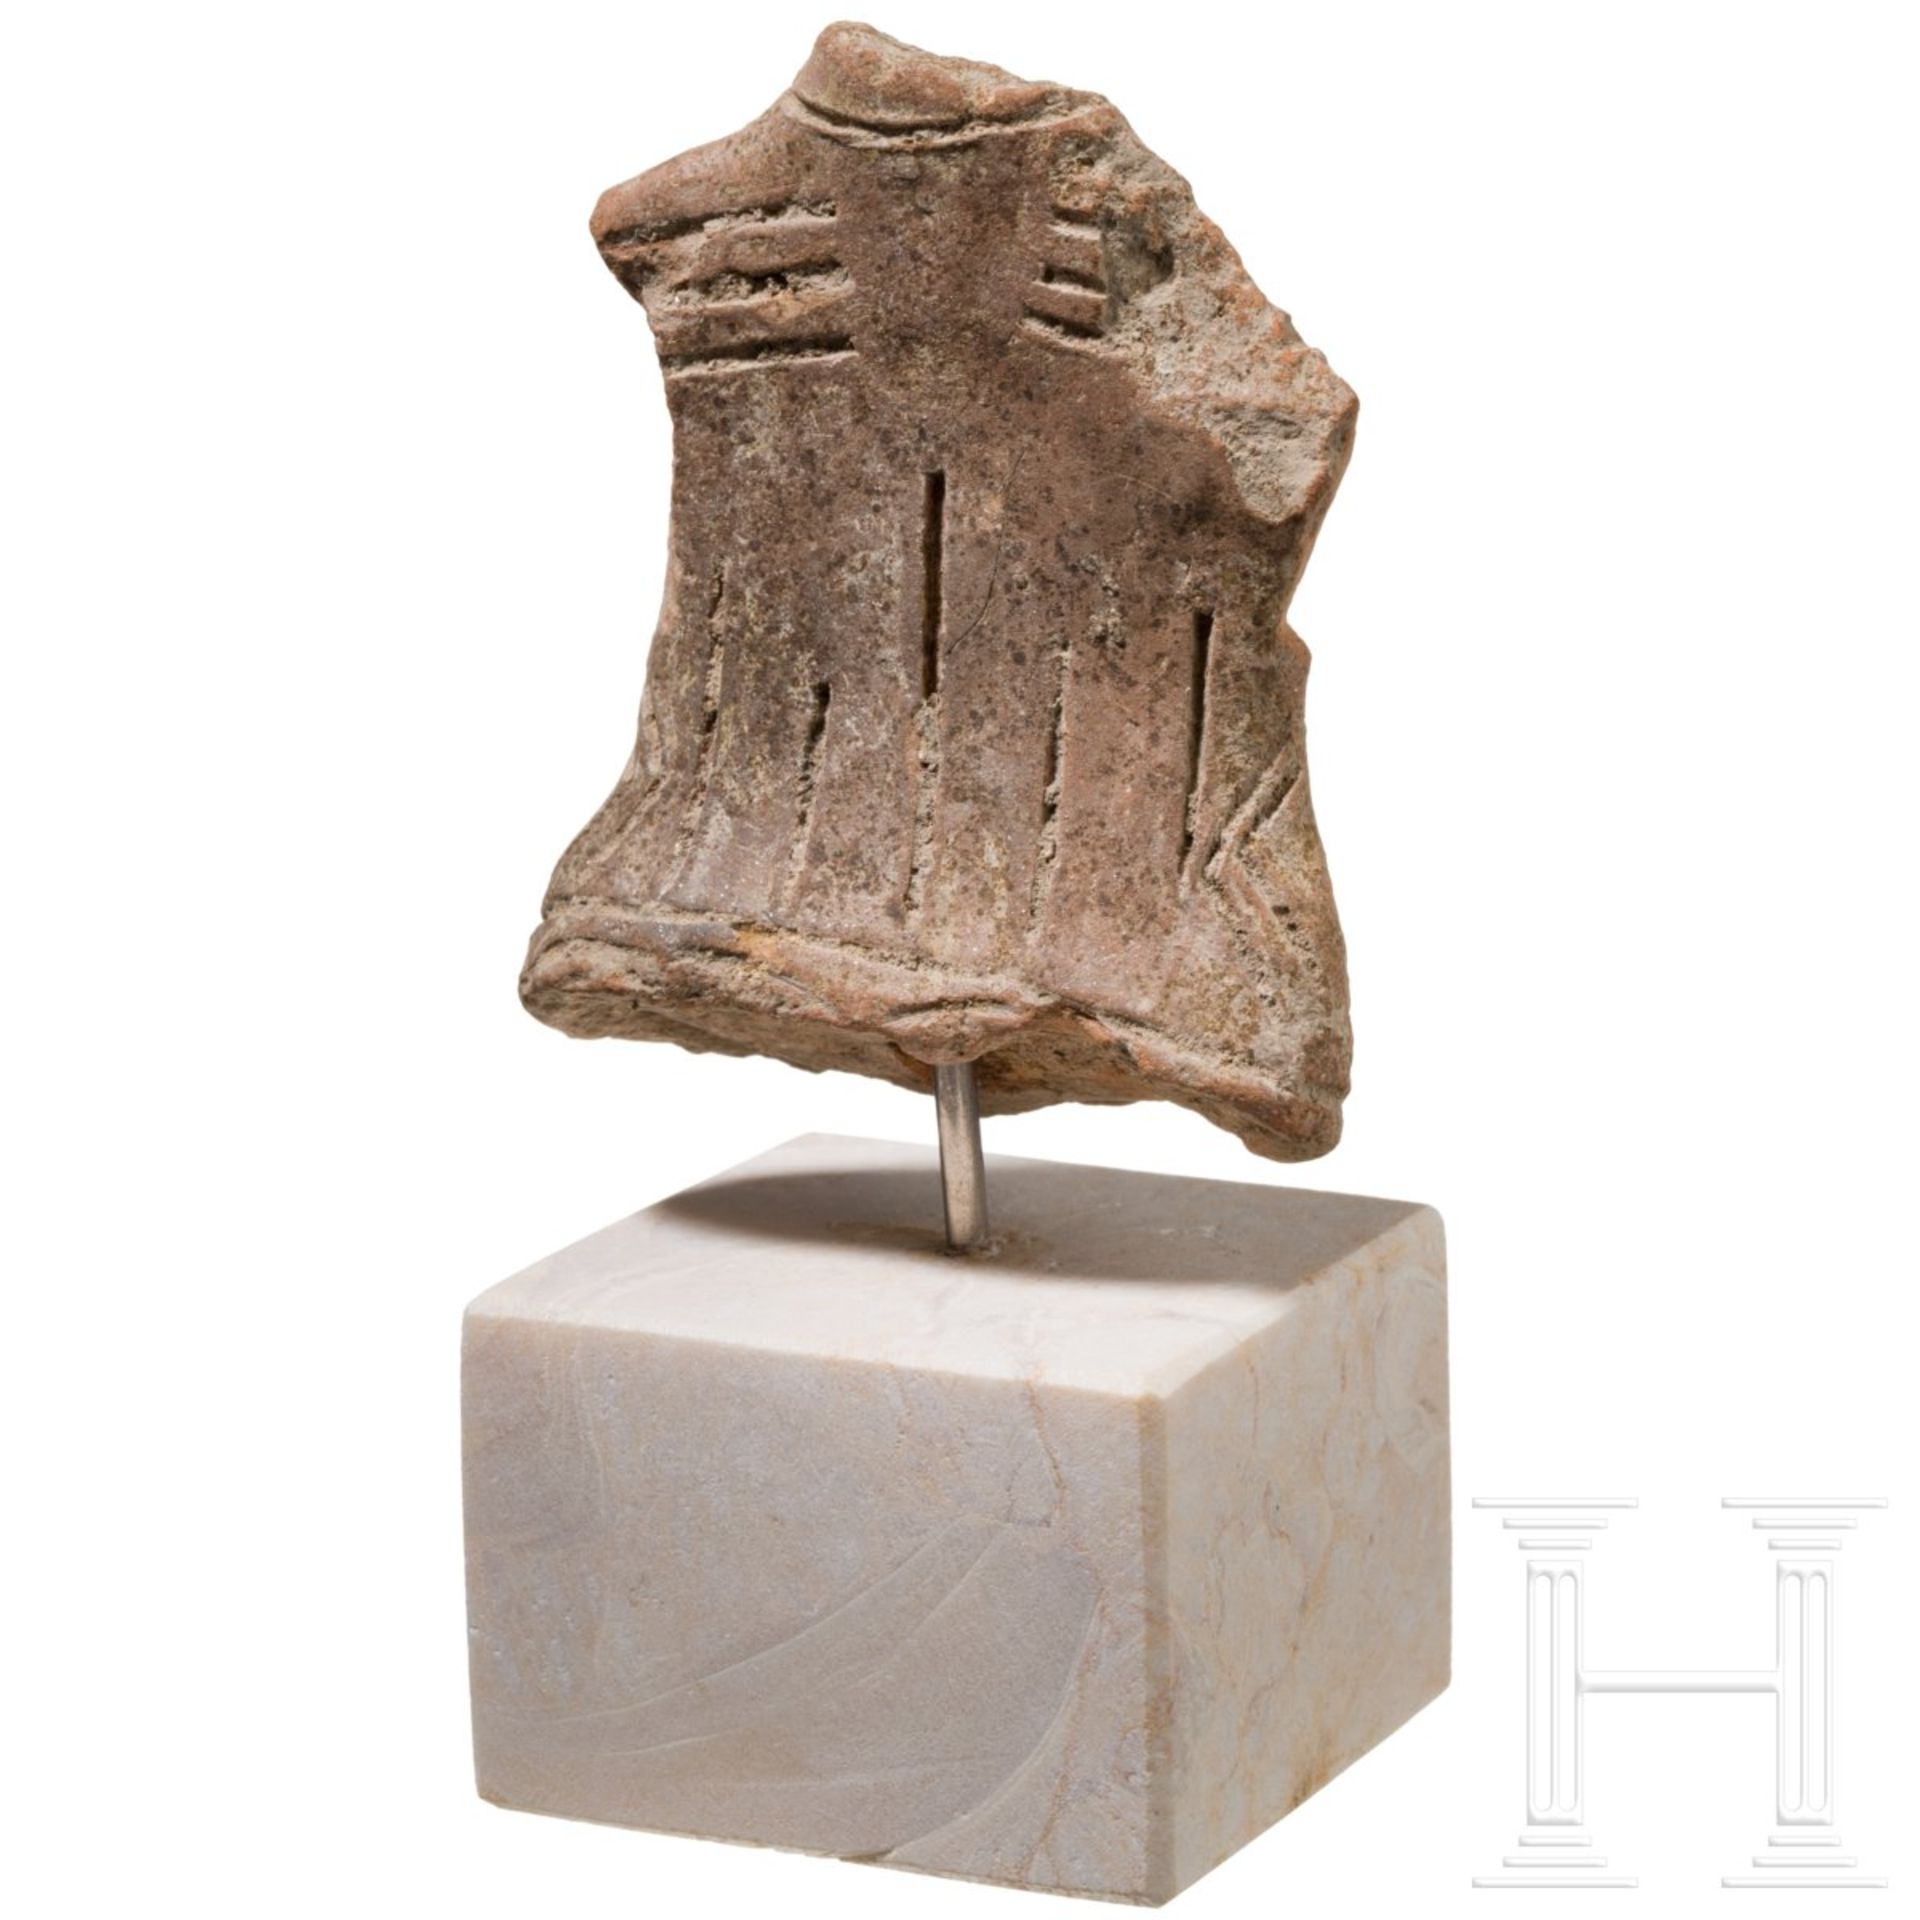 Terrakotta-Idol, Vinca-Kultur, Südosteuropa, 4. Jtsd. v. Chr. - Bild 4 aus 5